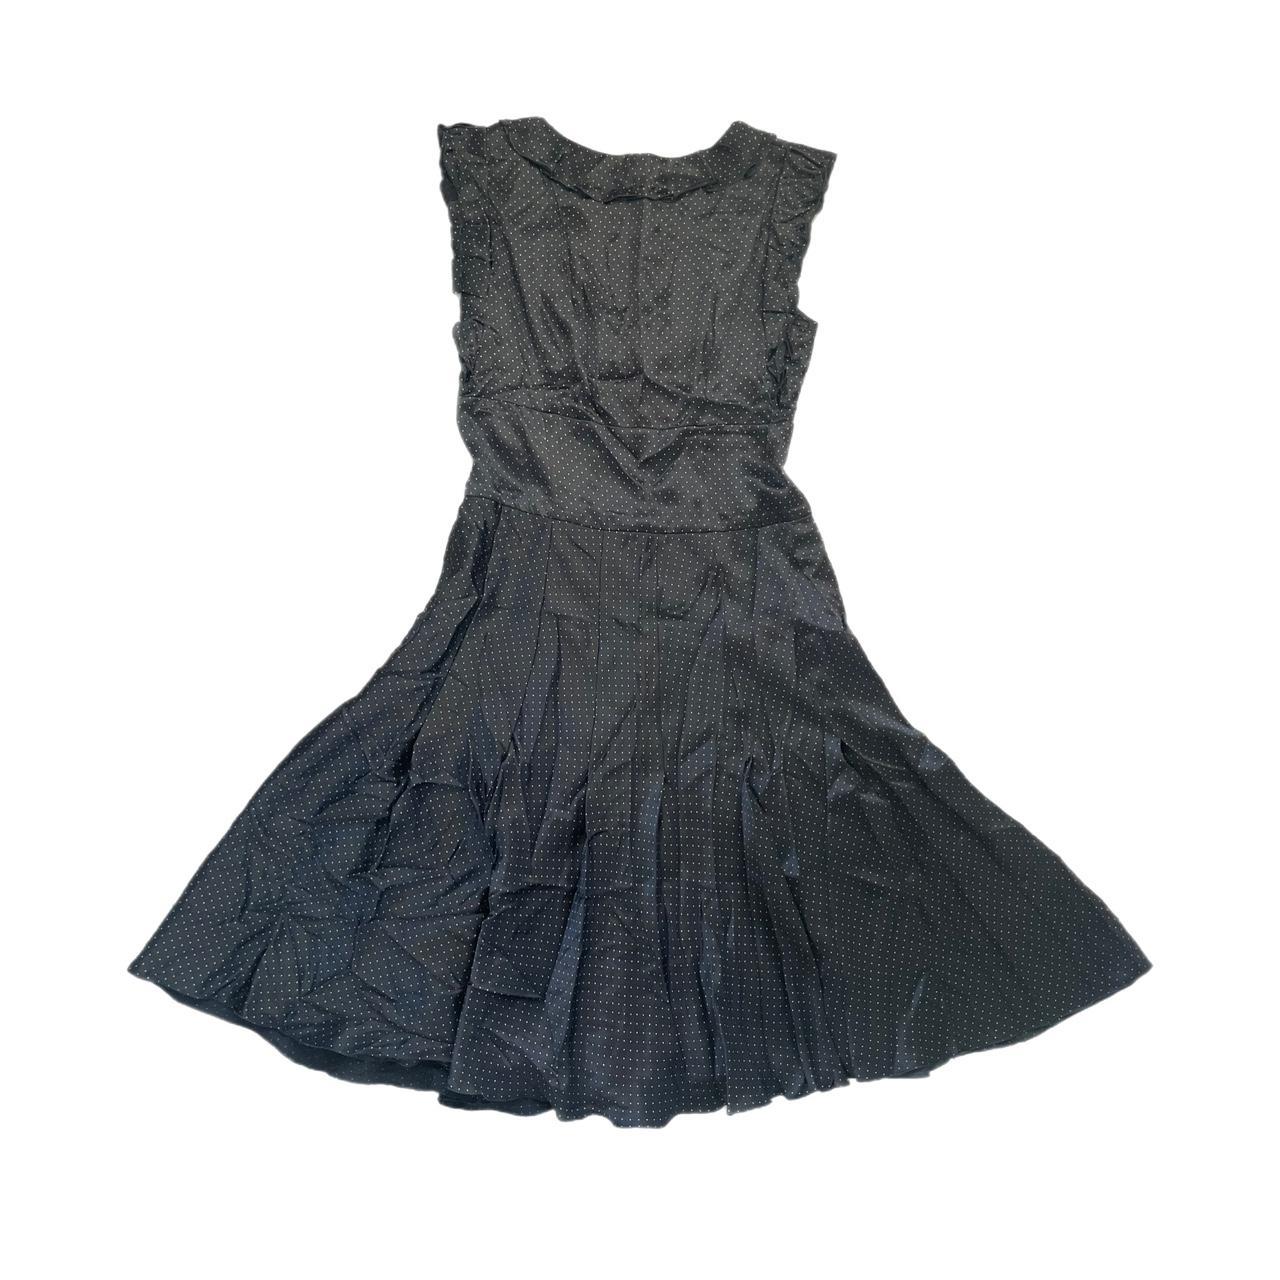 Moschino Cheap & Chic Women's Black Dress (2)